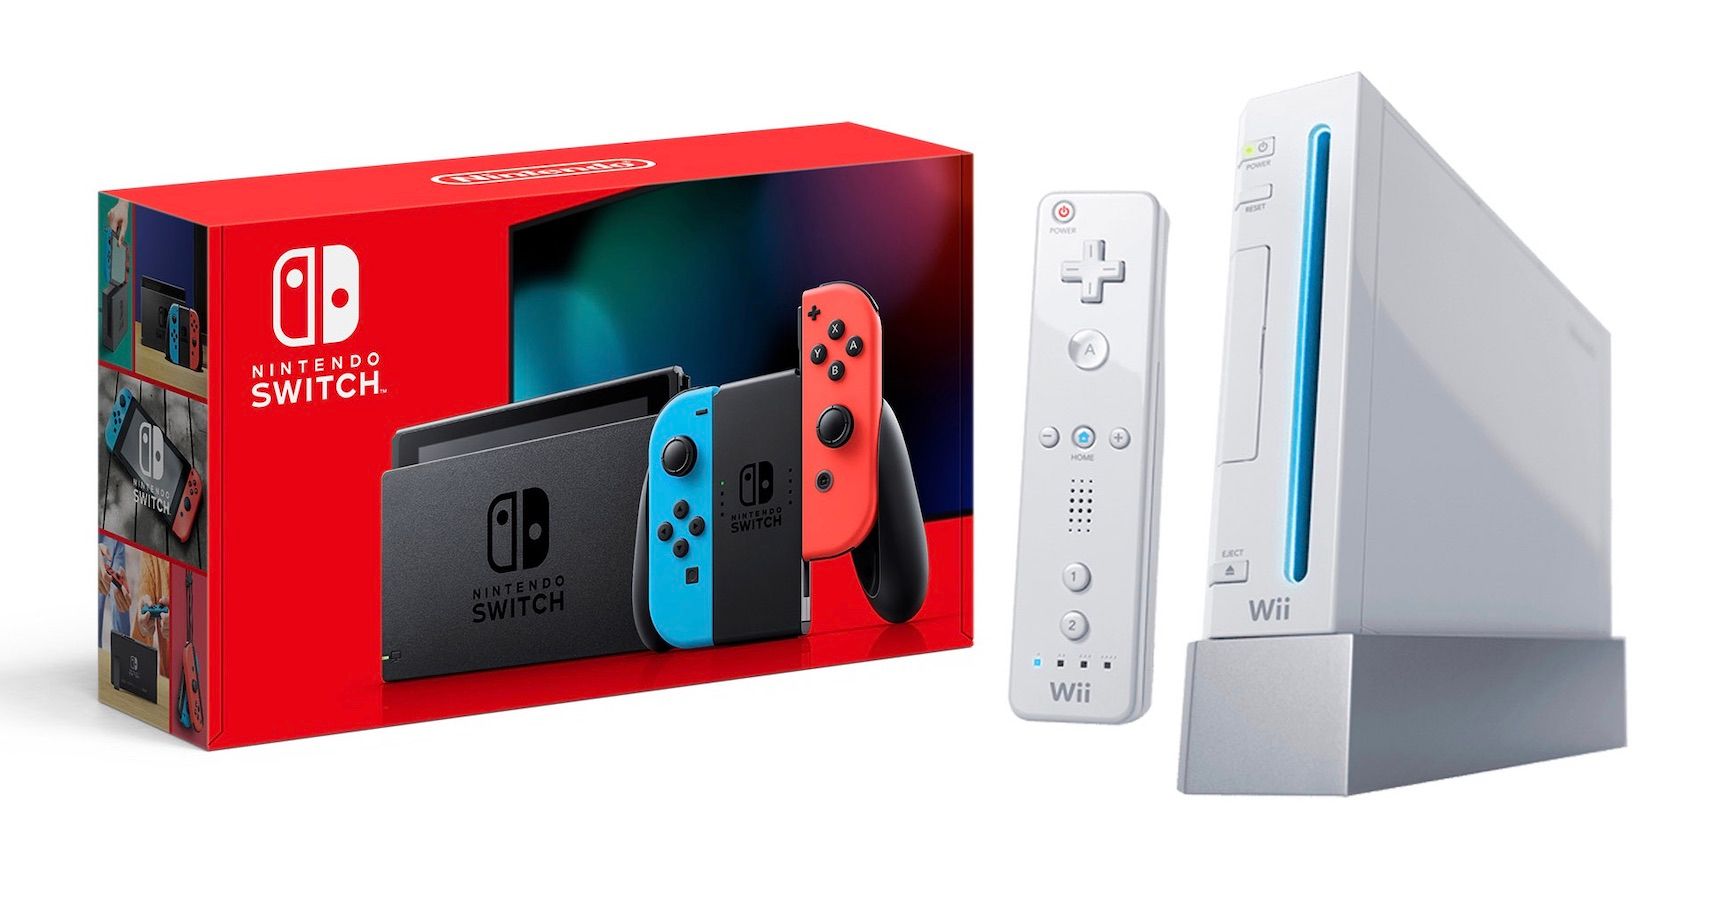 Nintendo Switch Plans To Surpass Wii S 100 Million Sales